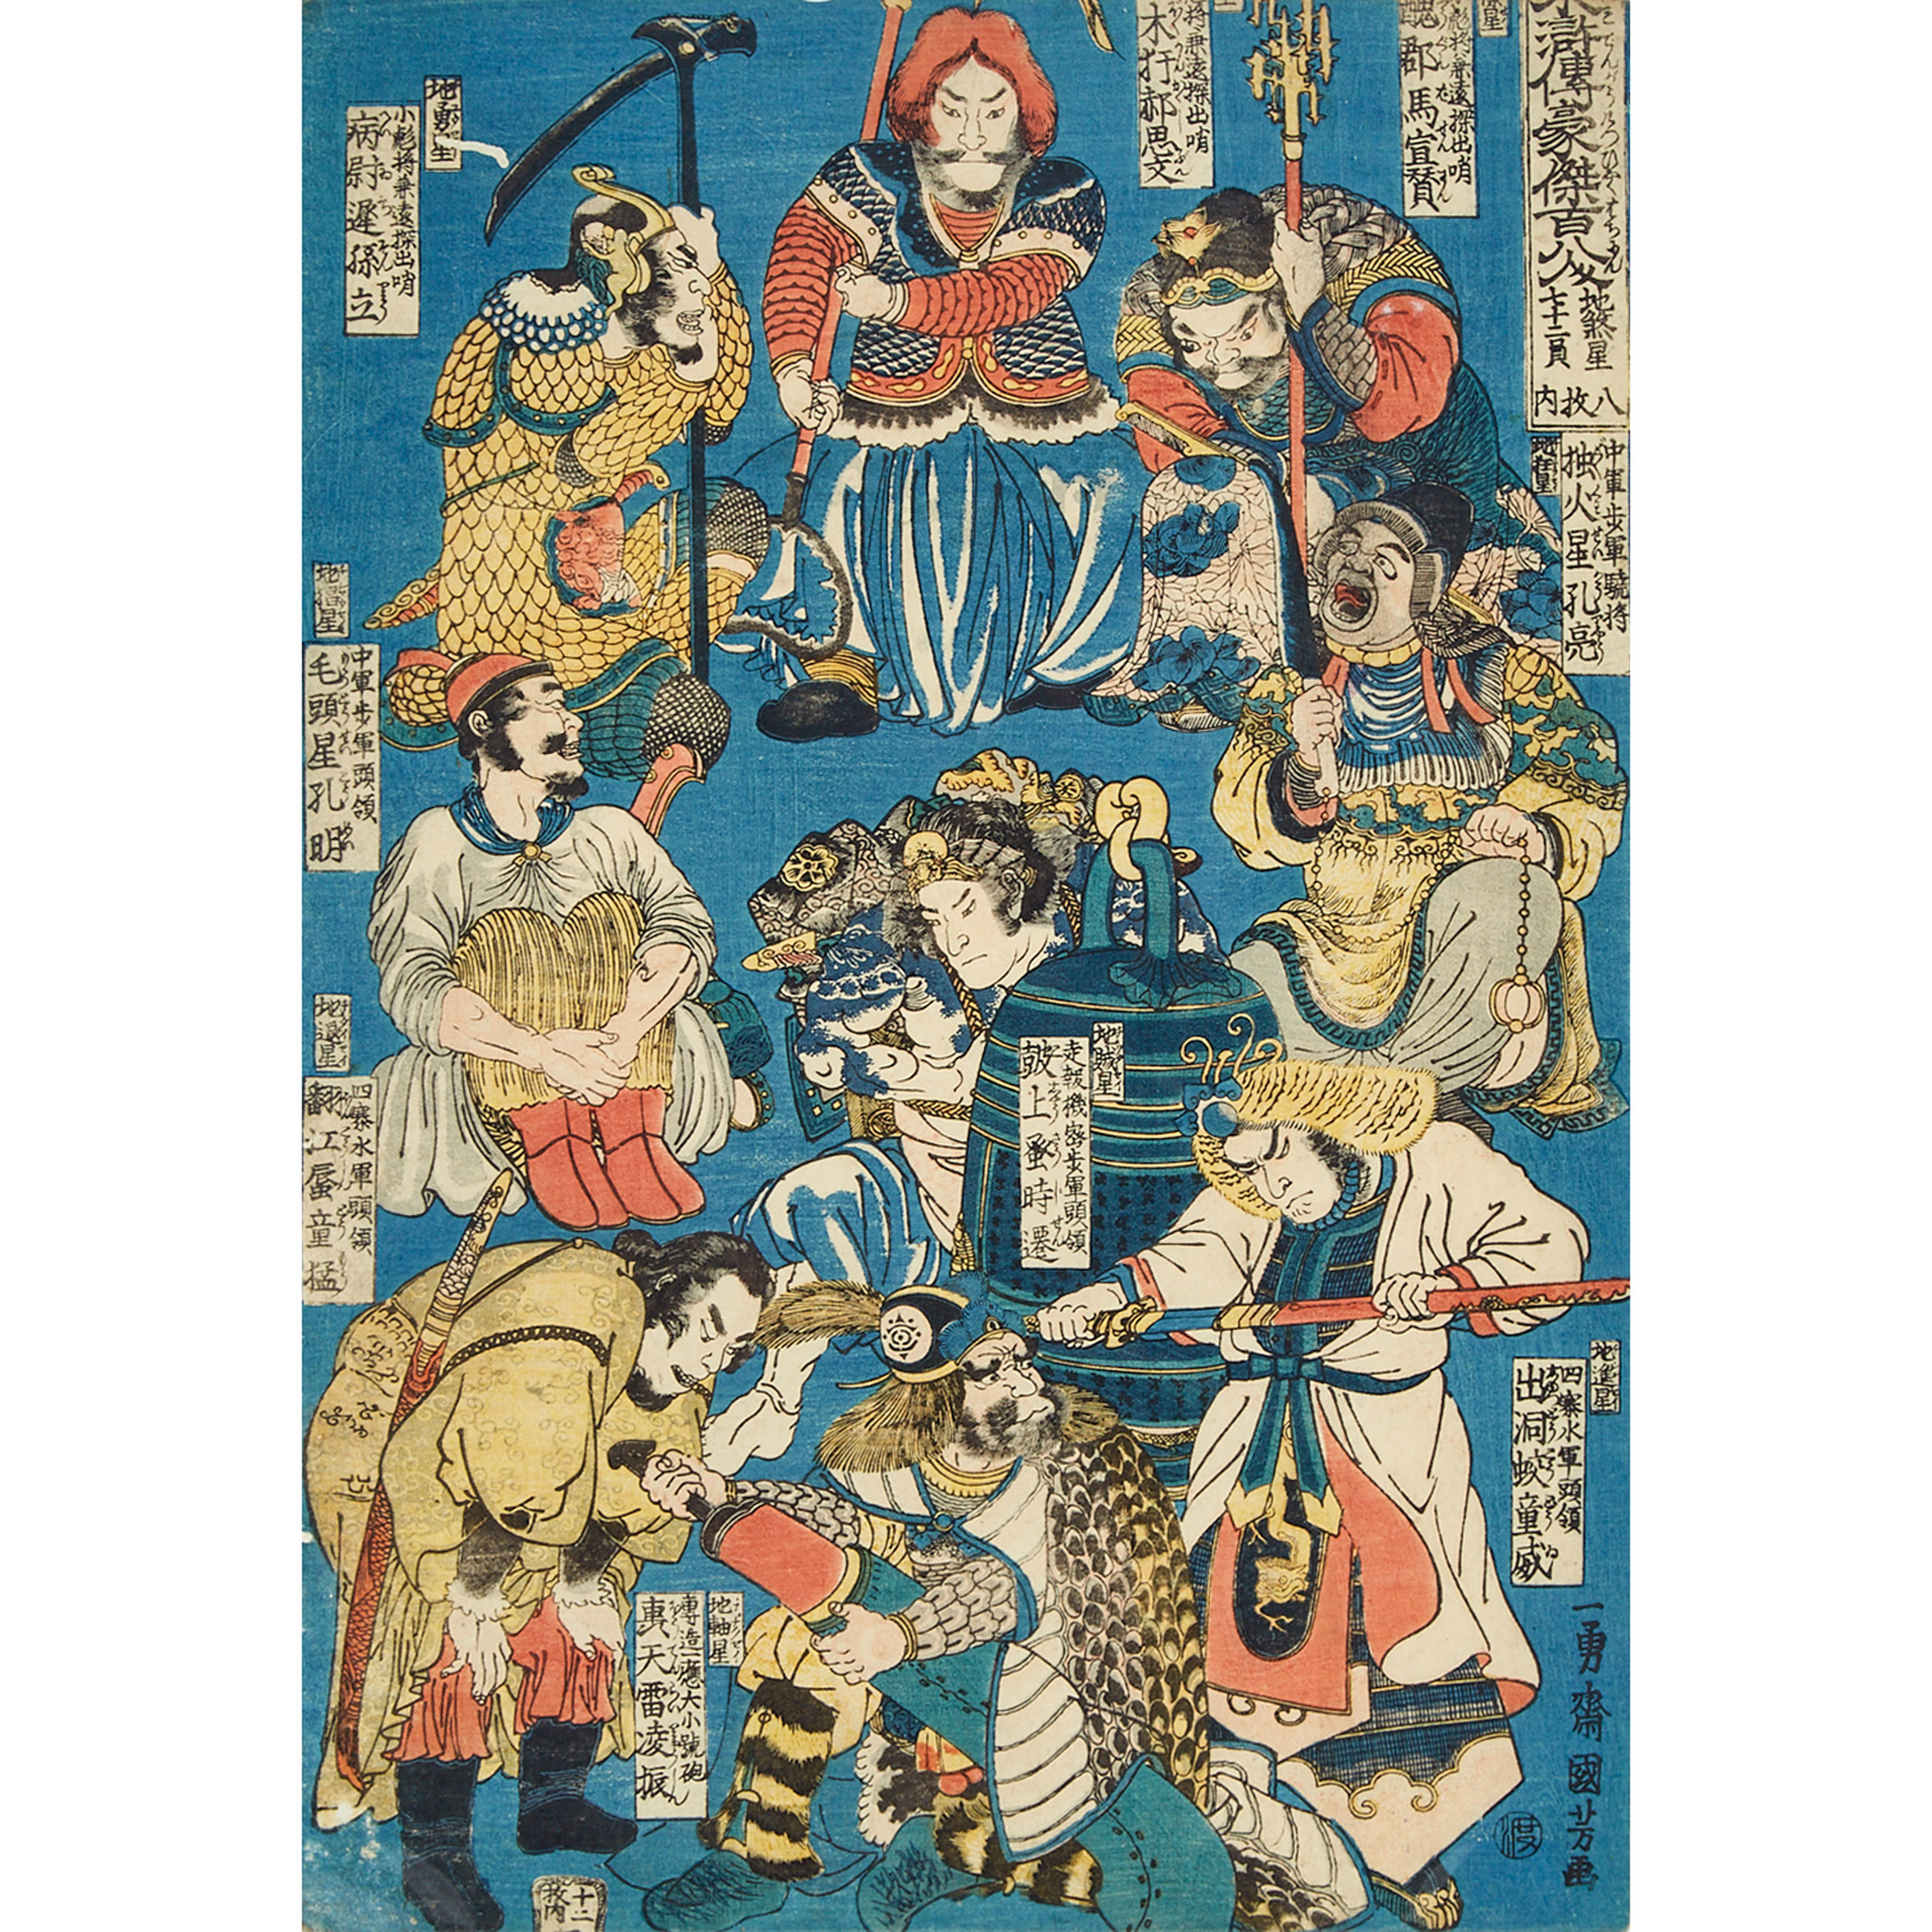 Utagawa Kuniyoshi (1798-1861), One Hundred and Eight Heroes of the Suikoden Story, Circa 1845